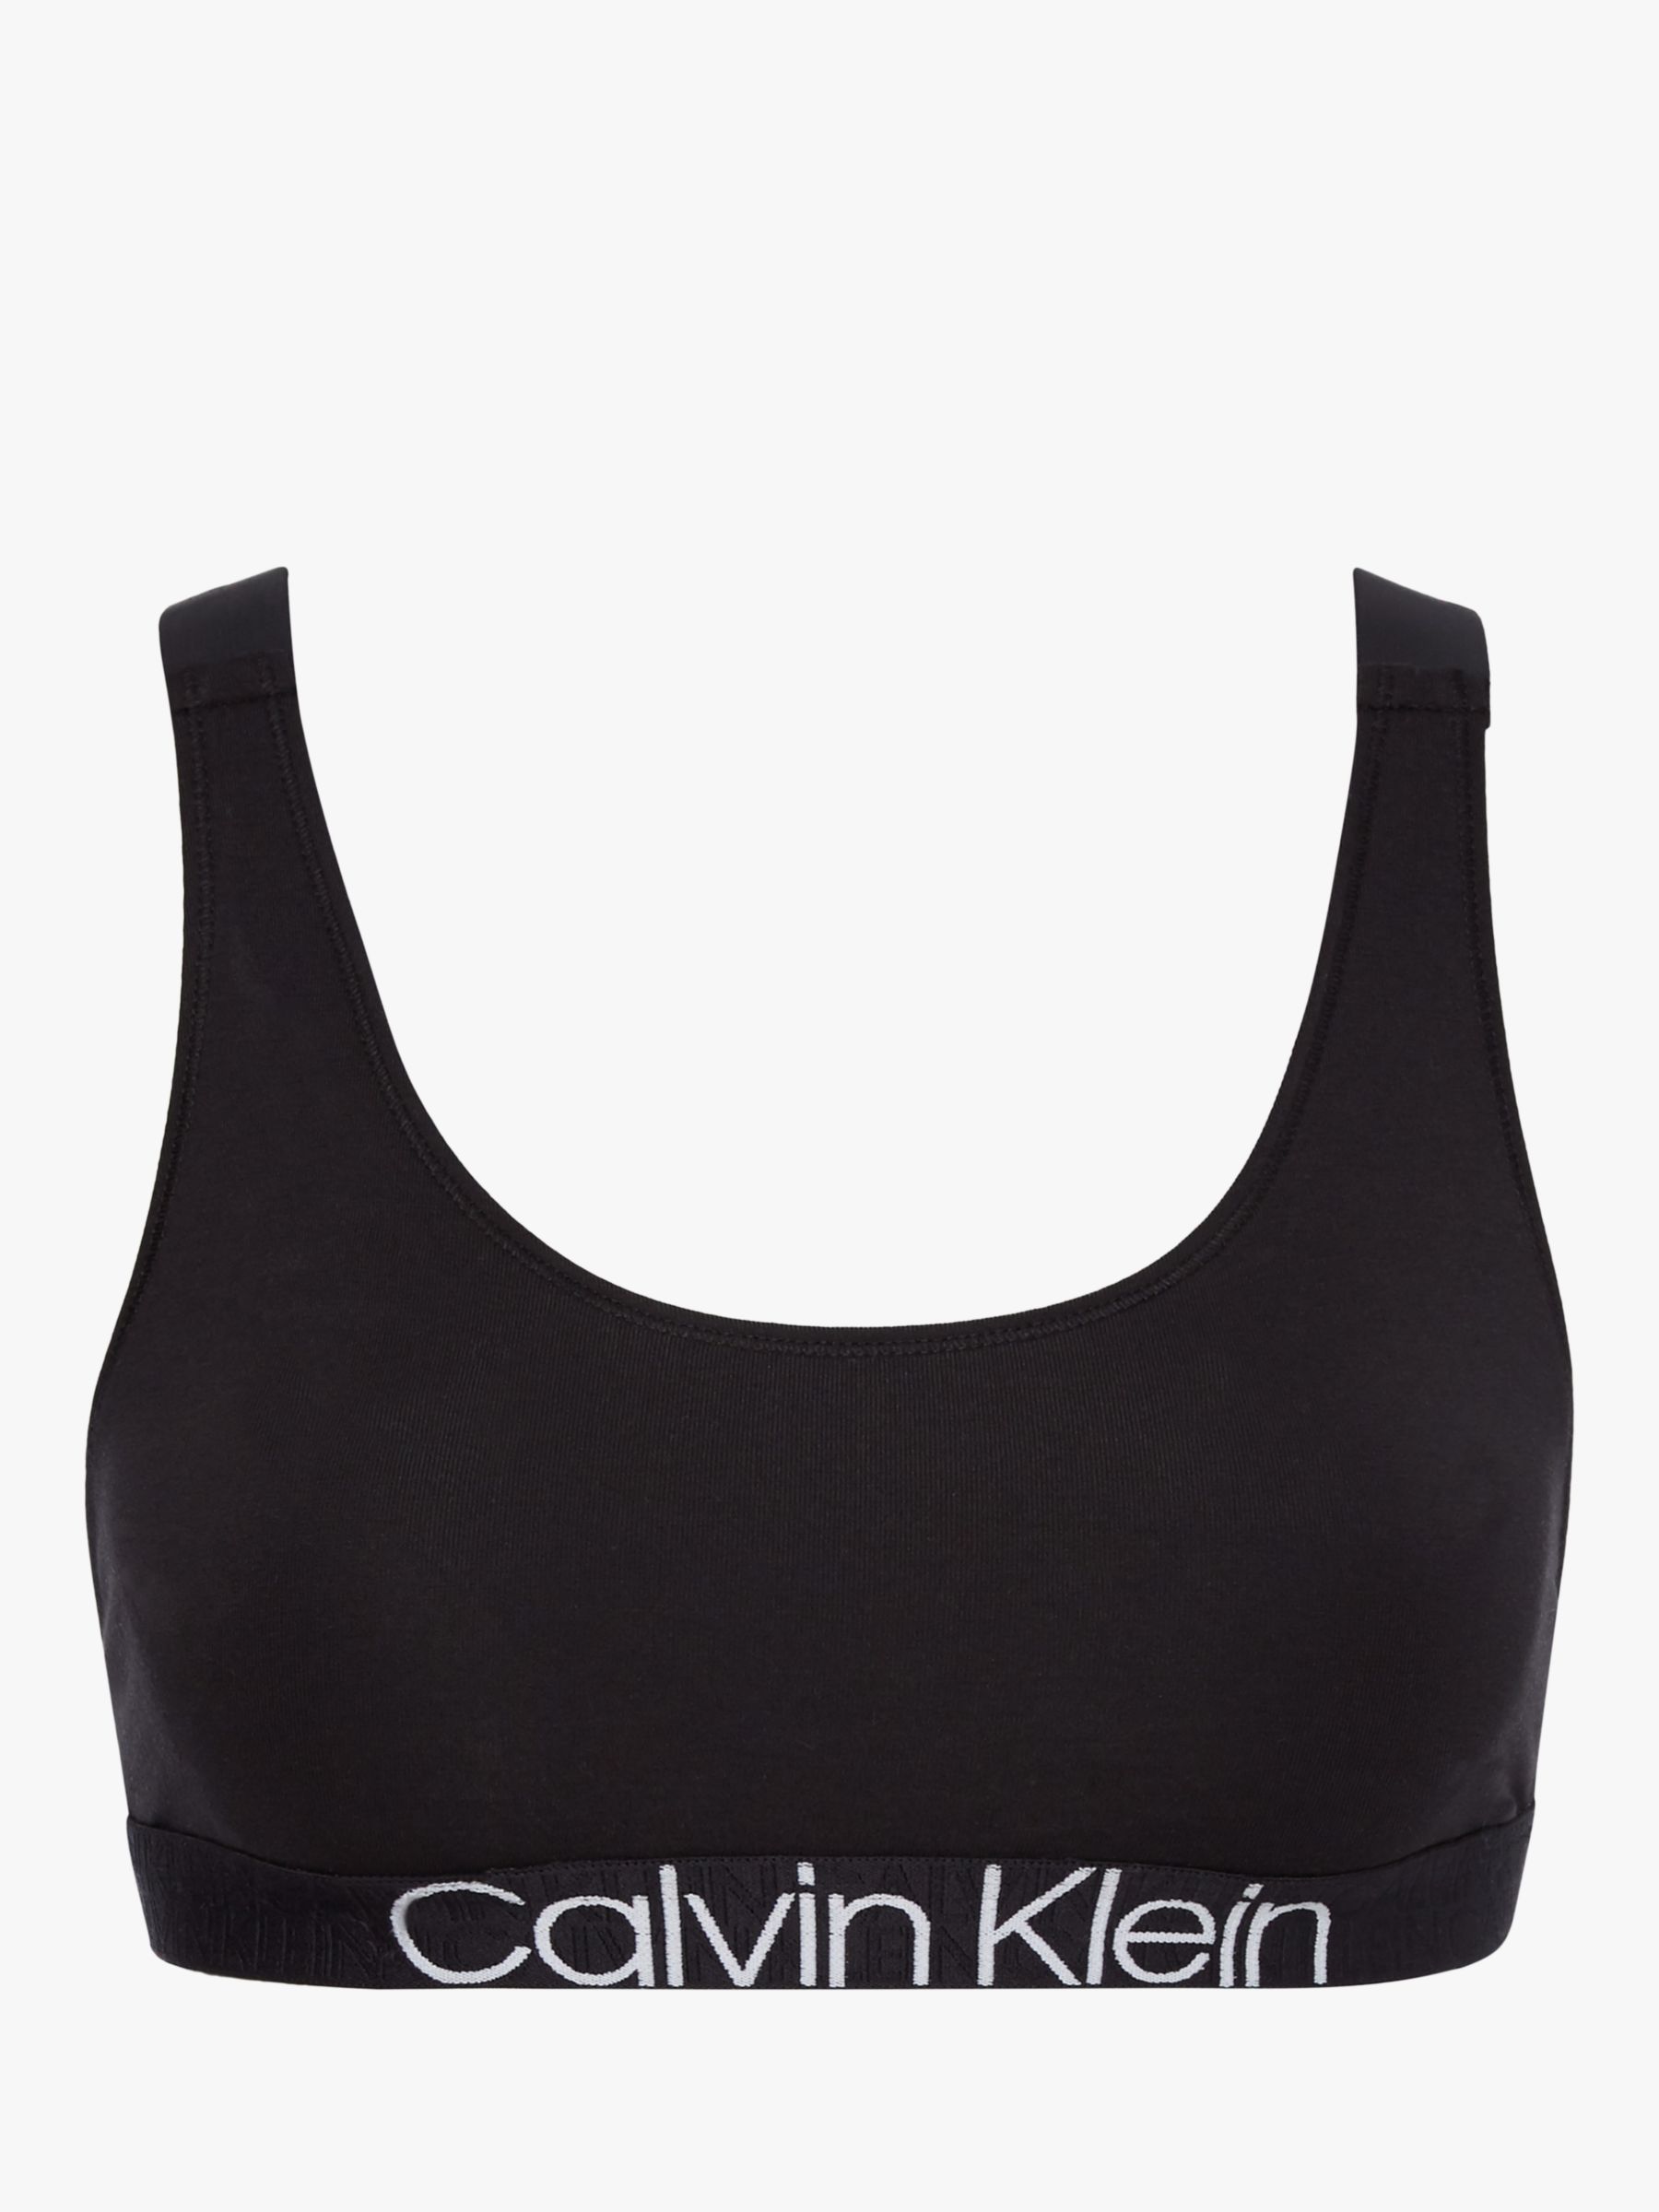 Calvin Klein Reconsidered Unlined Bralette, Black at John Lewis & Partners